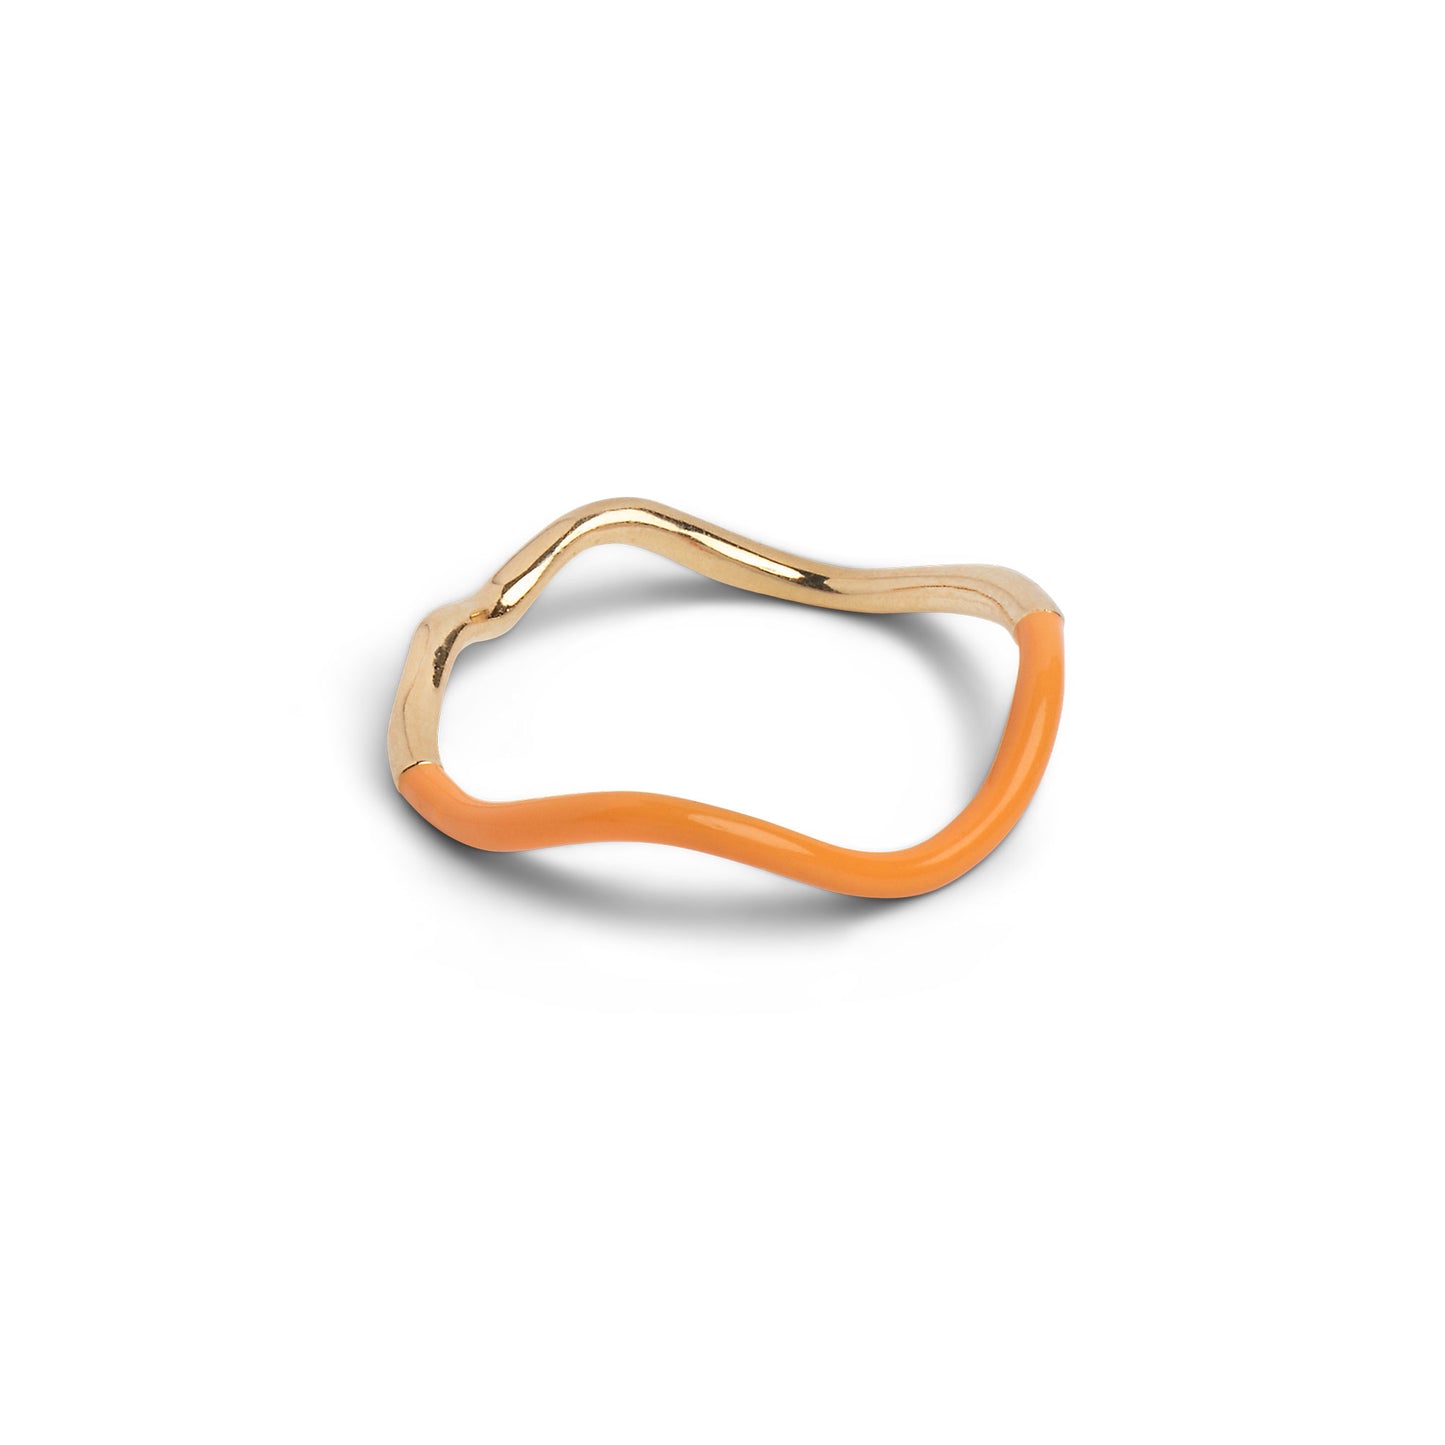 ENAMEL Copenhagen Ring, Sway Rings Orange